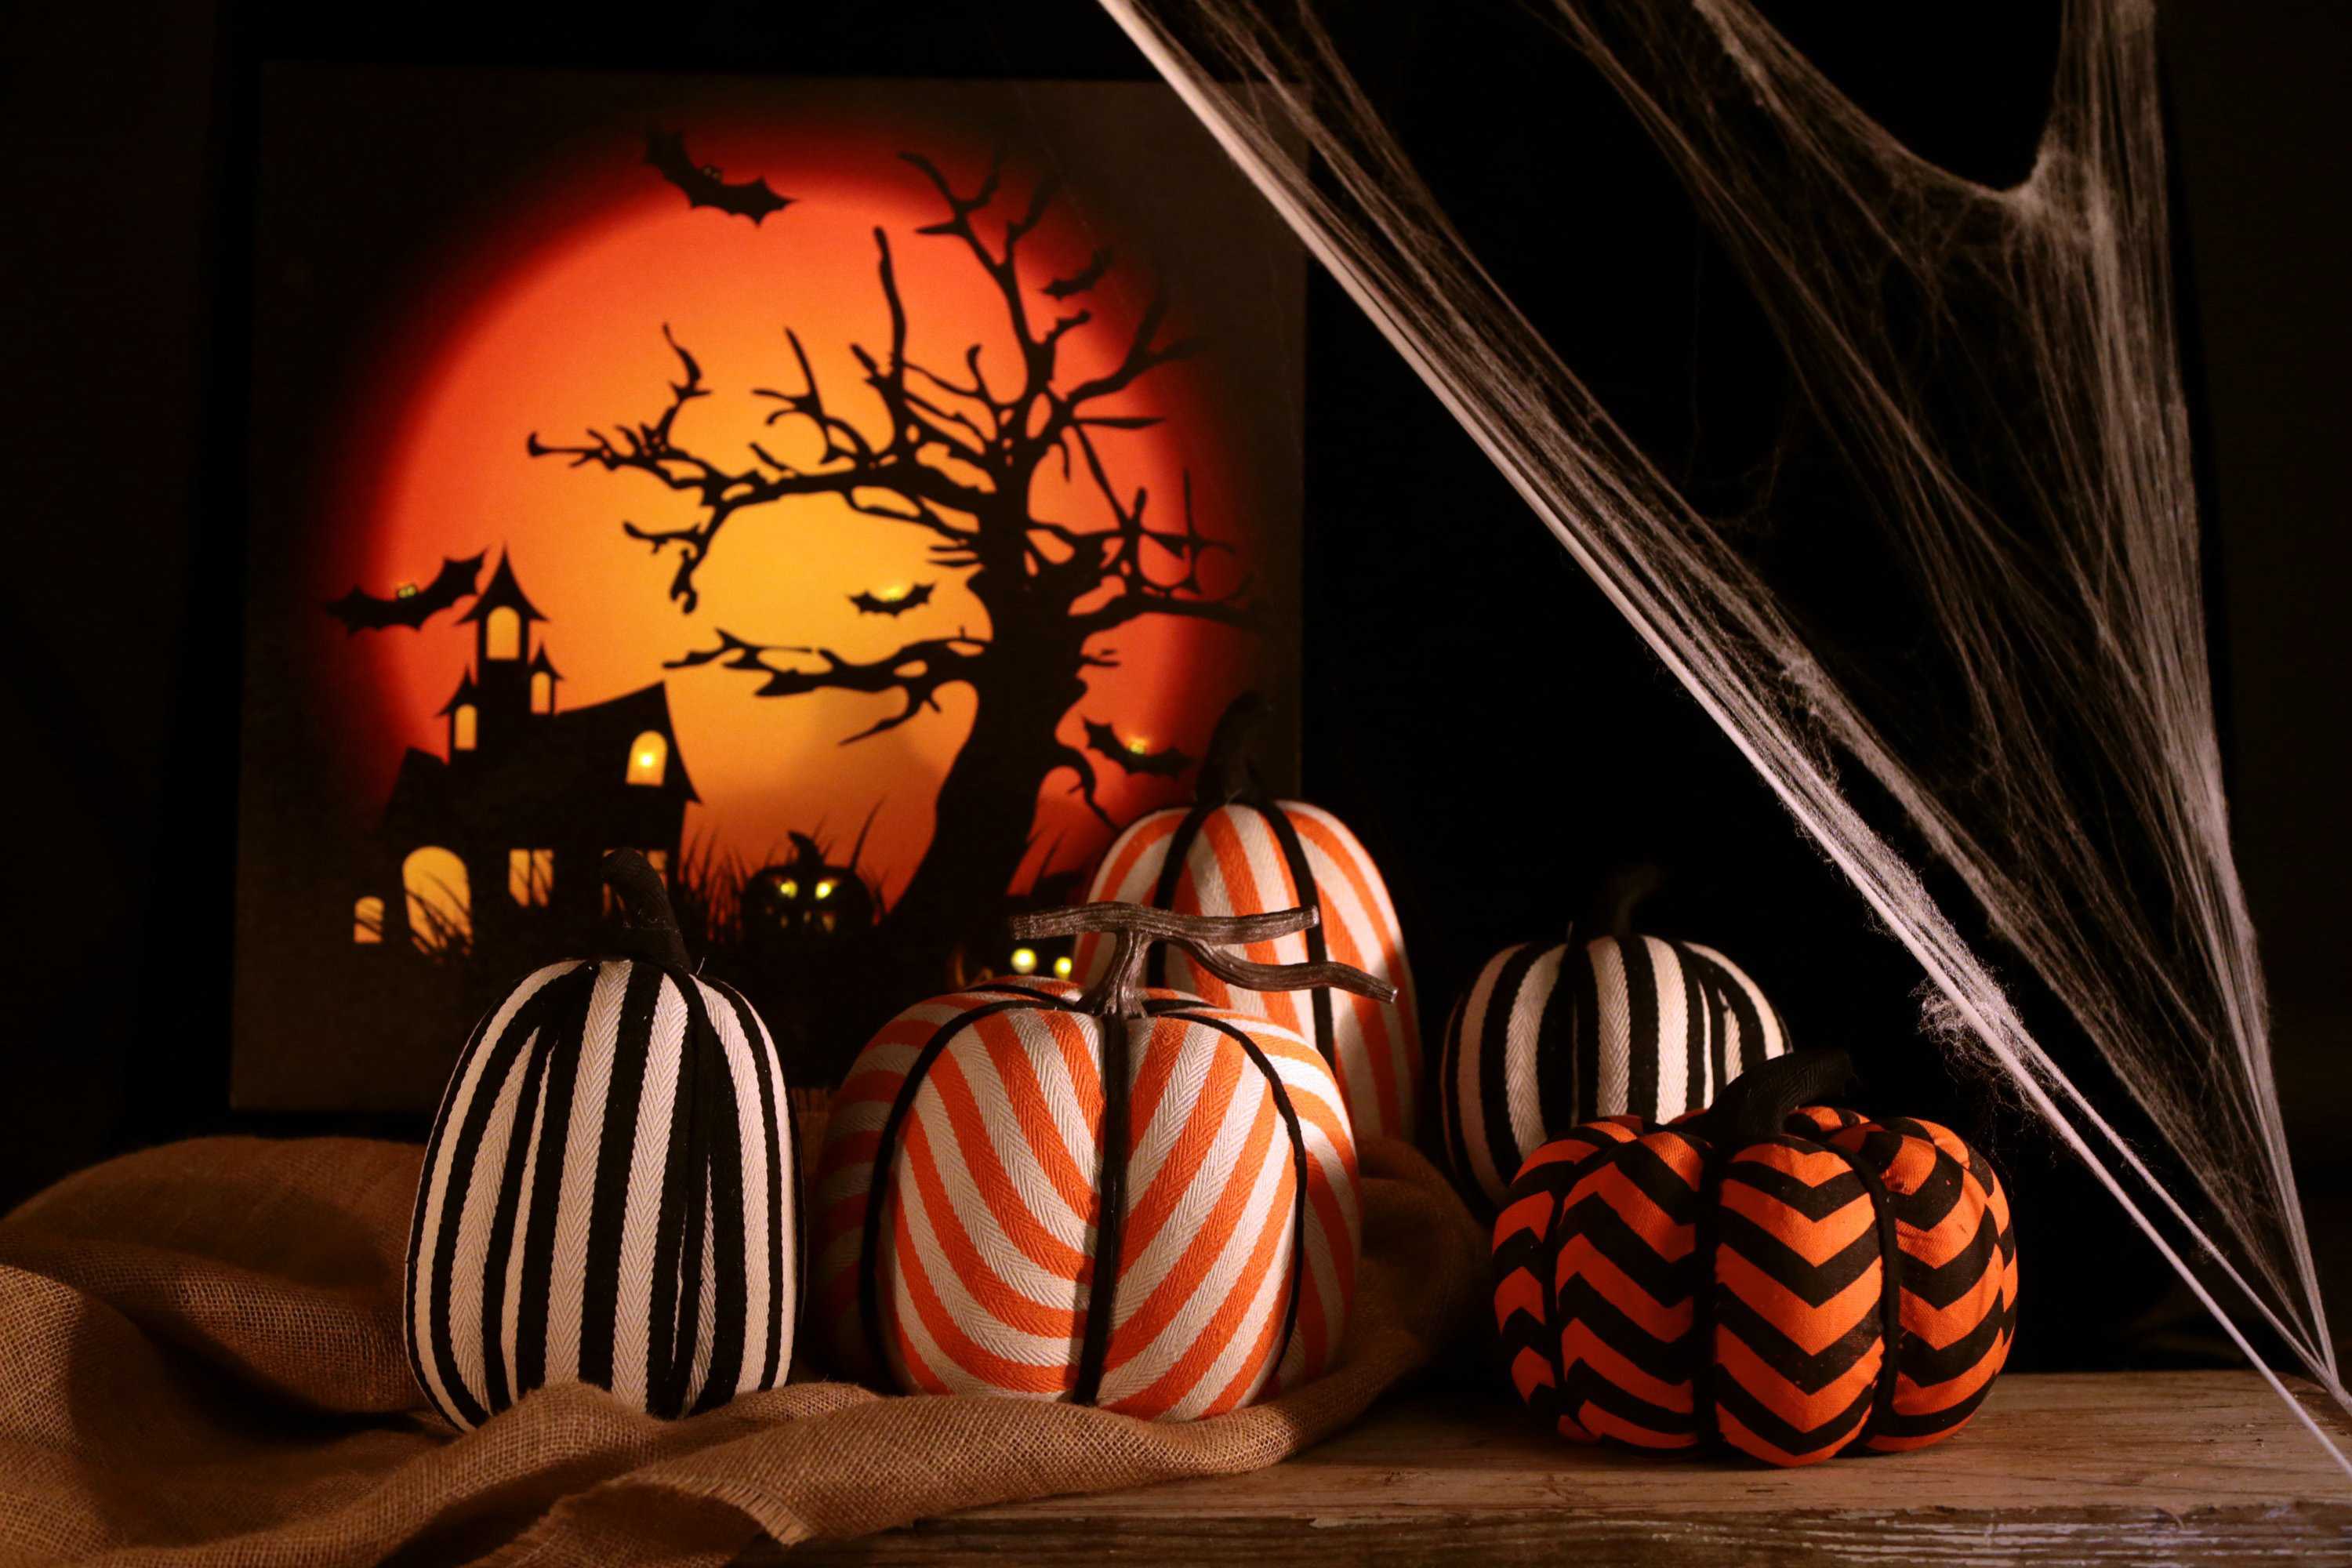 Halloween backdrop hangs behind cloth-decorated pumpkins